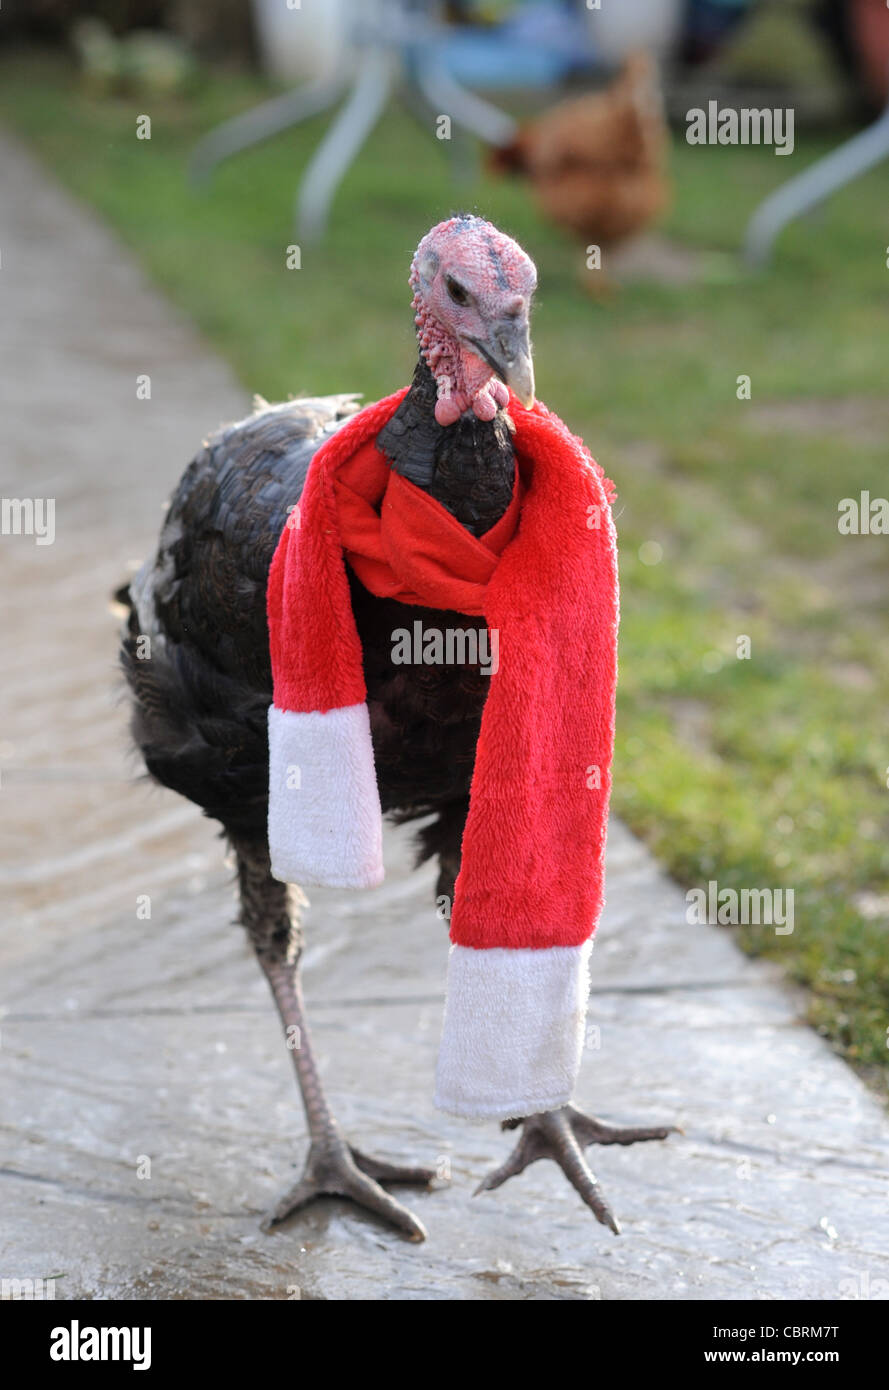 images of funny turkeys